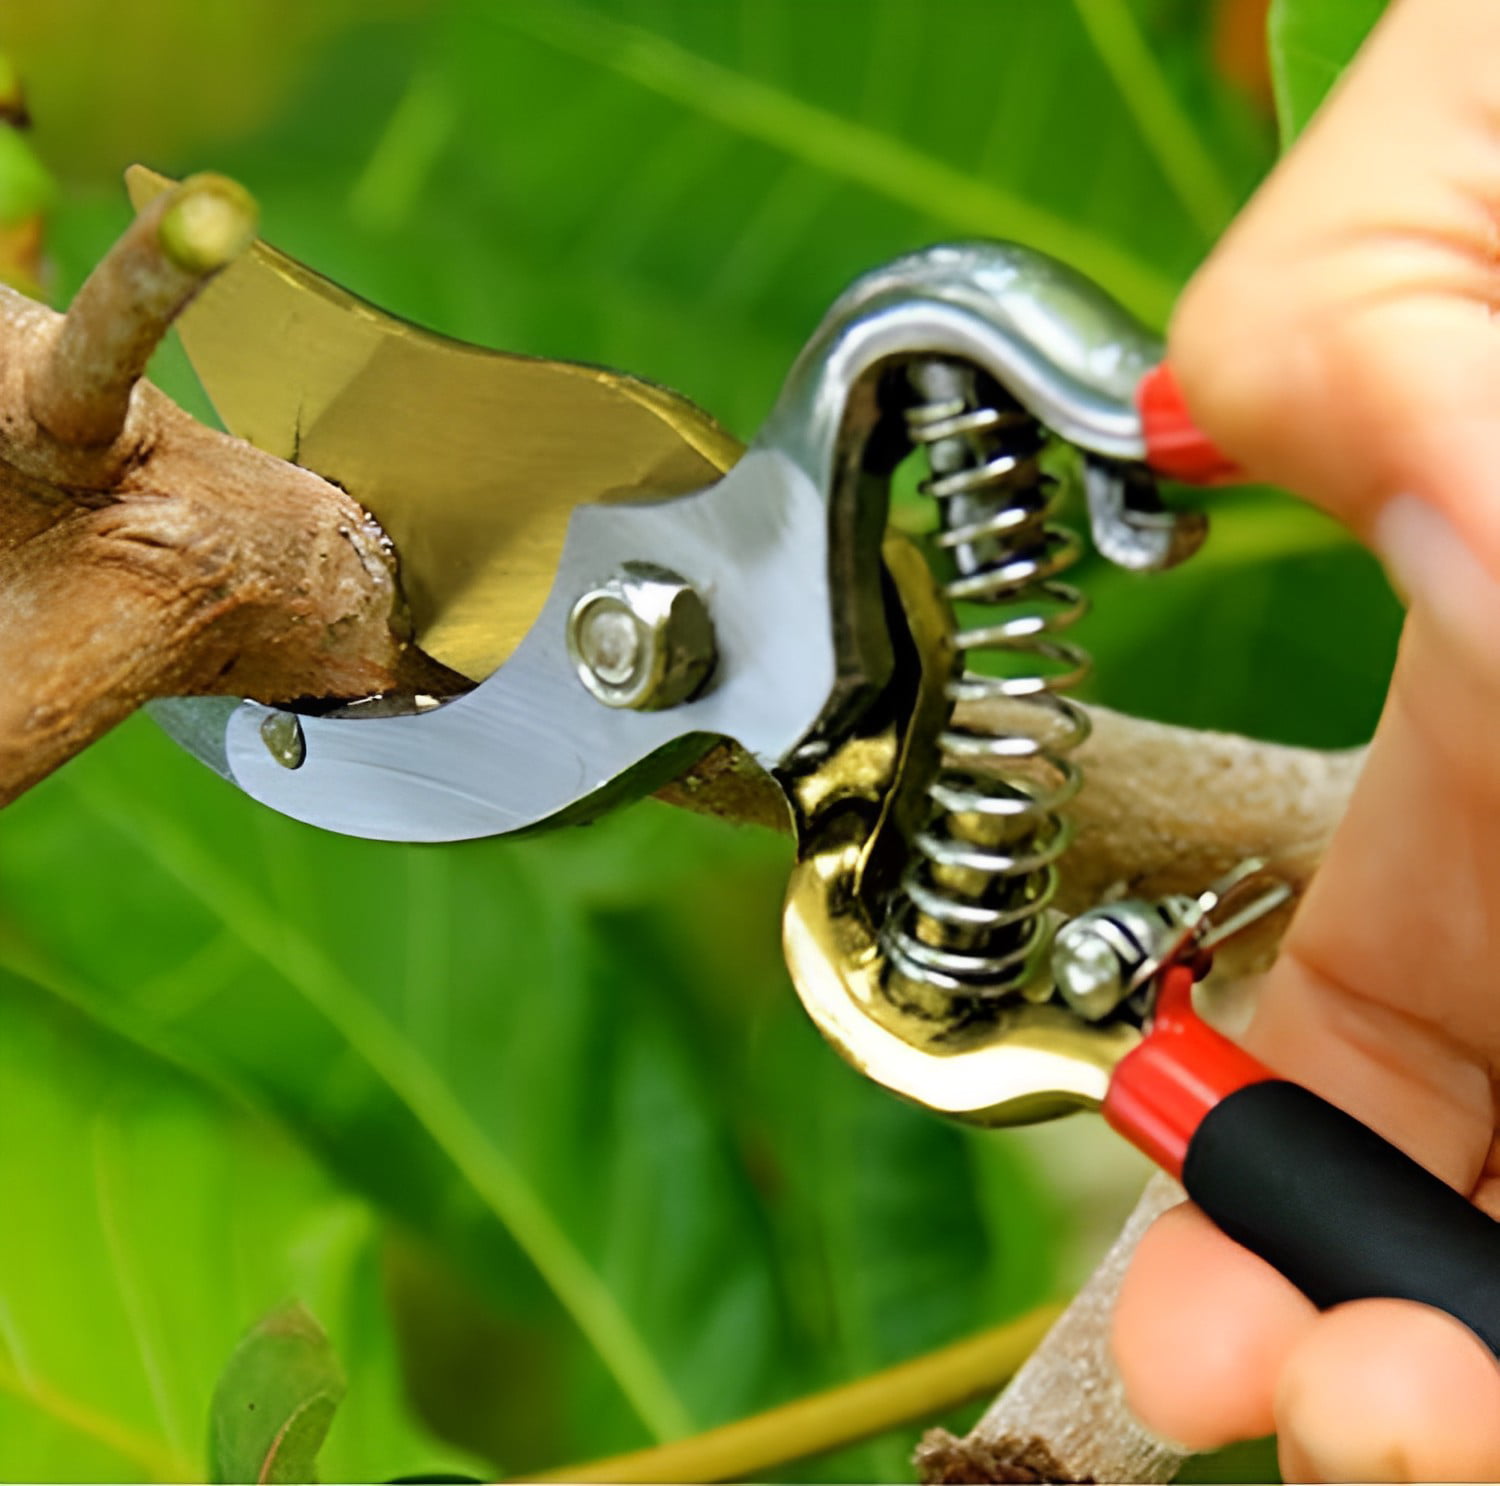 Garden Guru Soft Grip Garden Pruning Shears Scissors Clippers - Hardened Titanium Blades - Comfort Grips – Heavy Duty Bypass Hand Pruners Branch